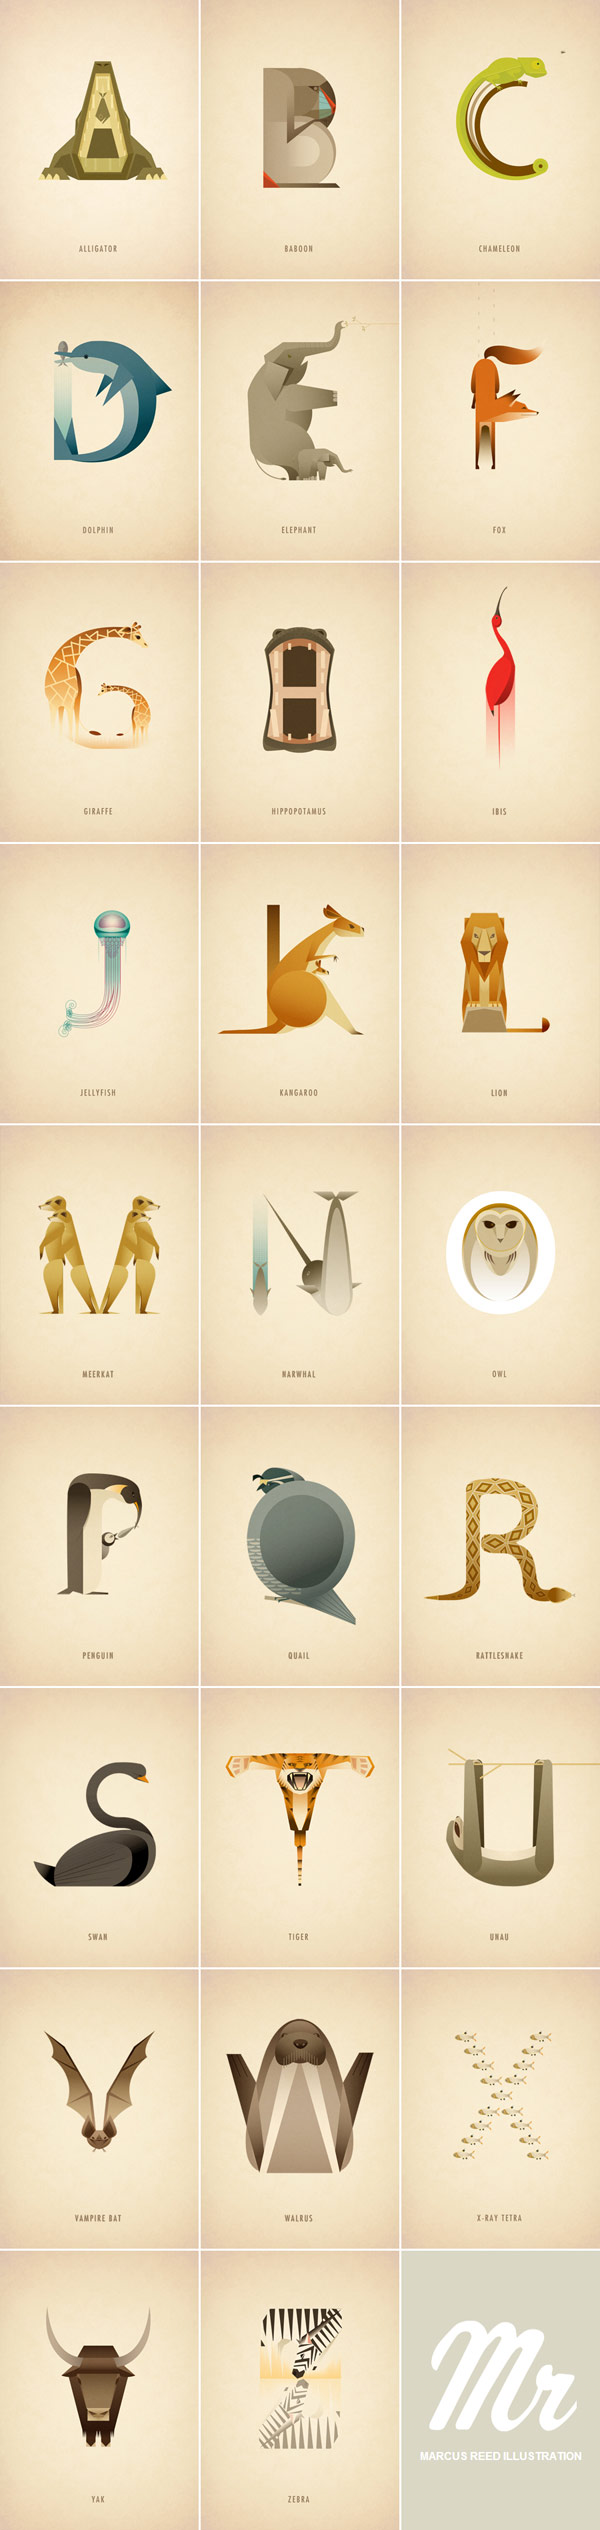 Illustrated animal alphabet created by freelance illustrator Marcus Reed